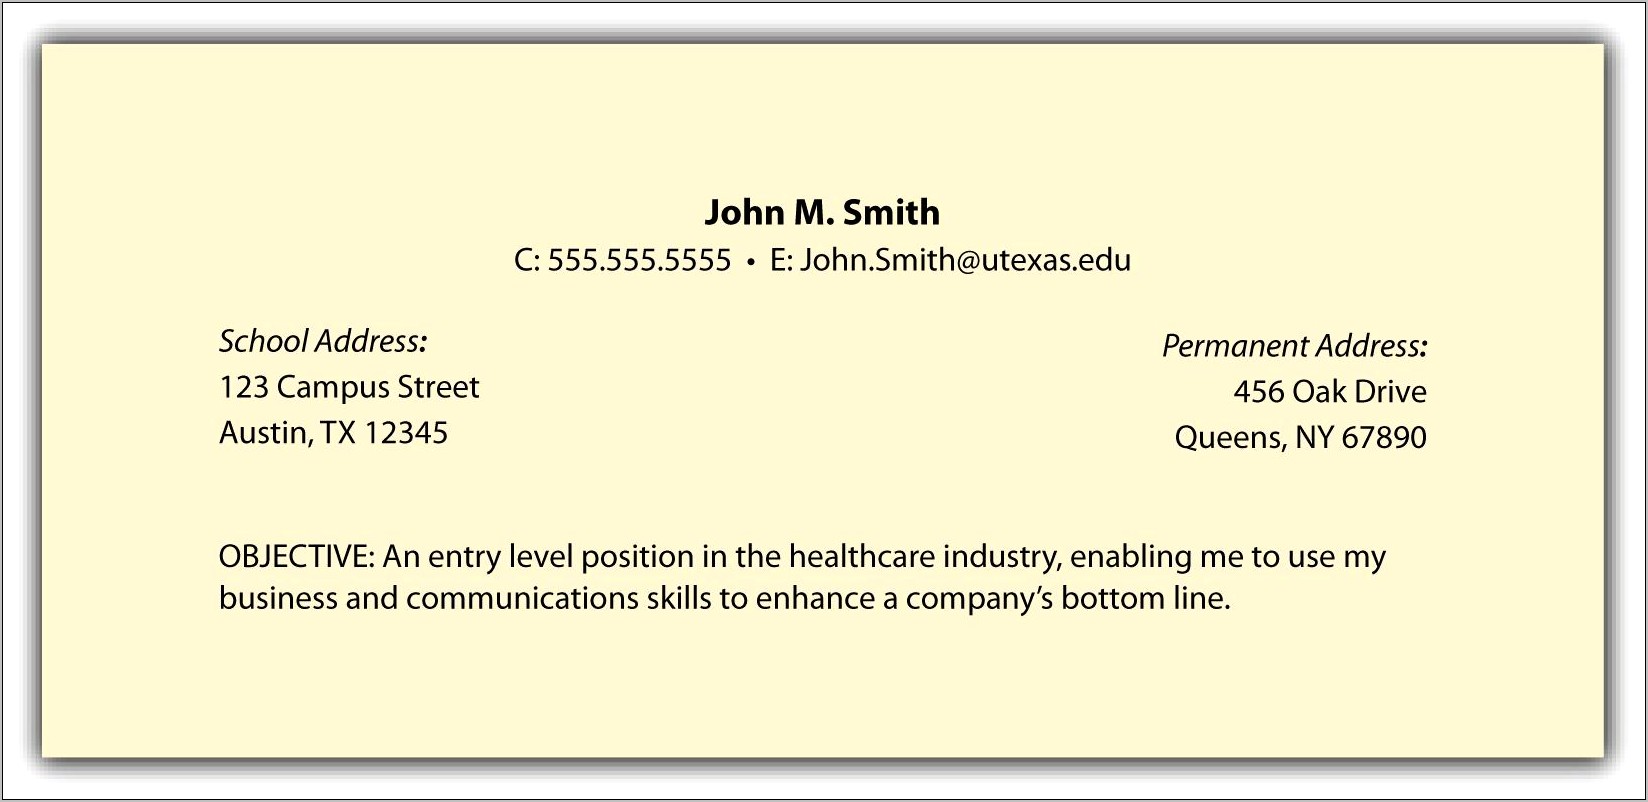 Resume Objectives Entry Level Job